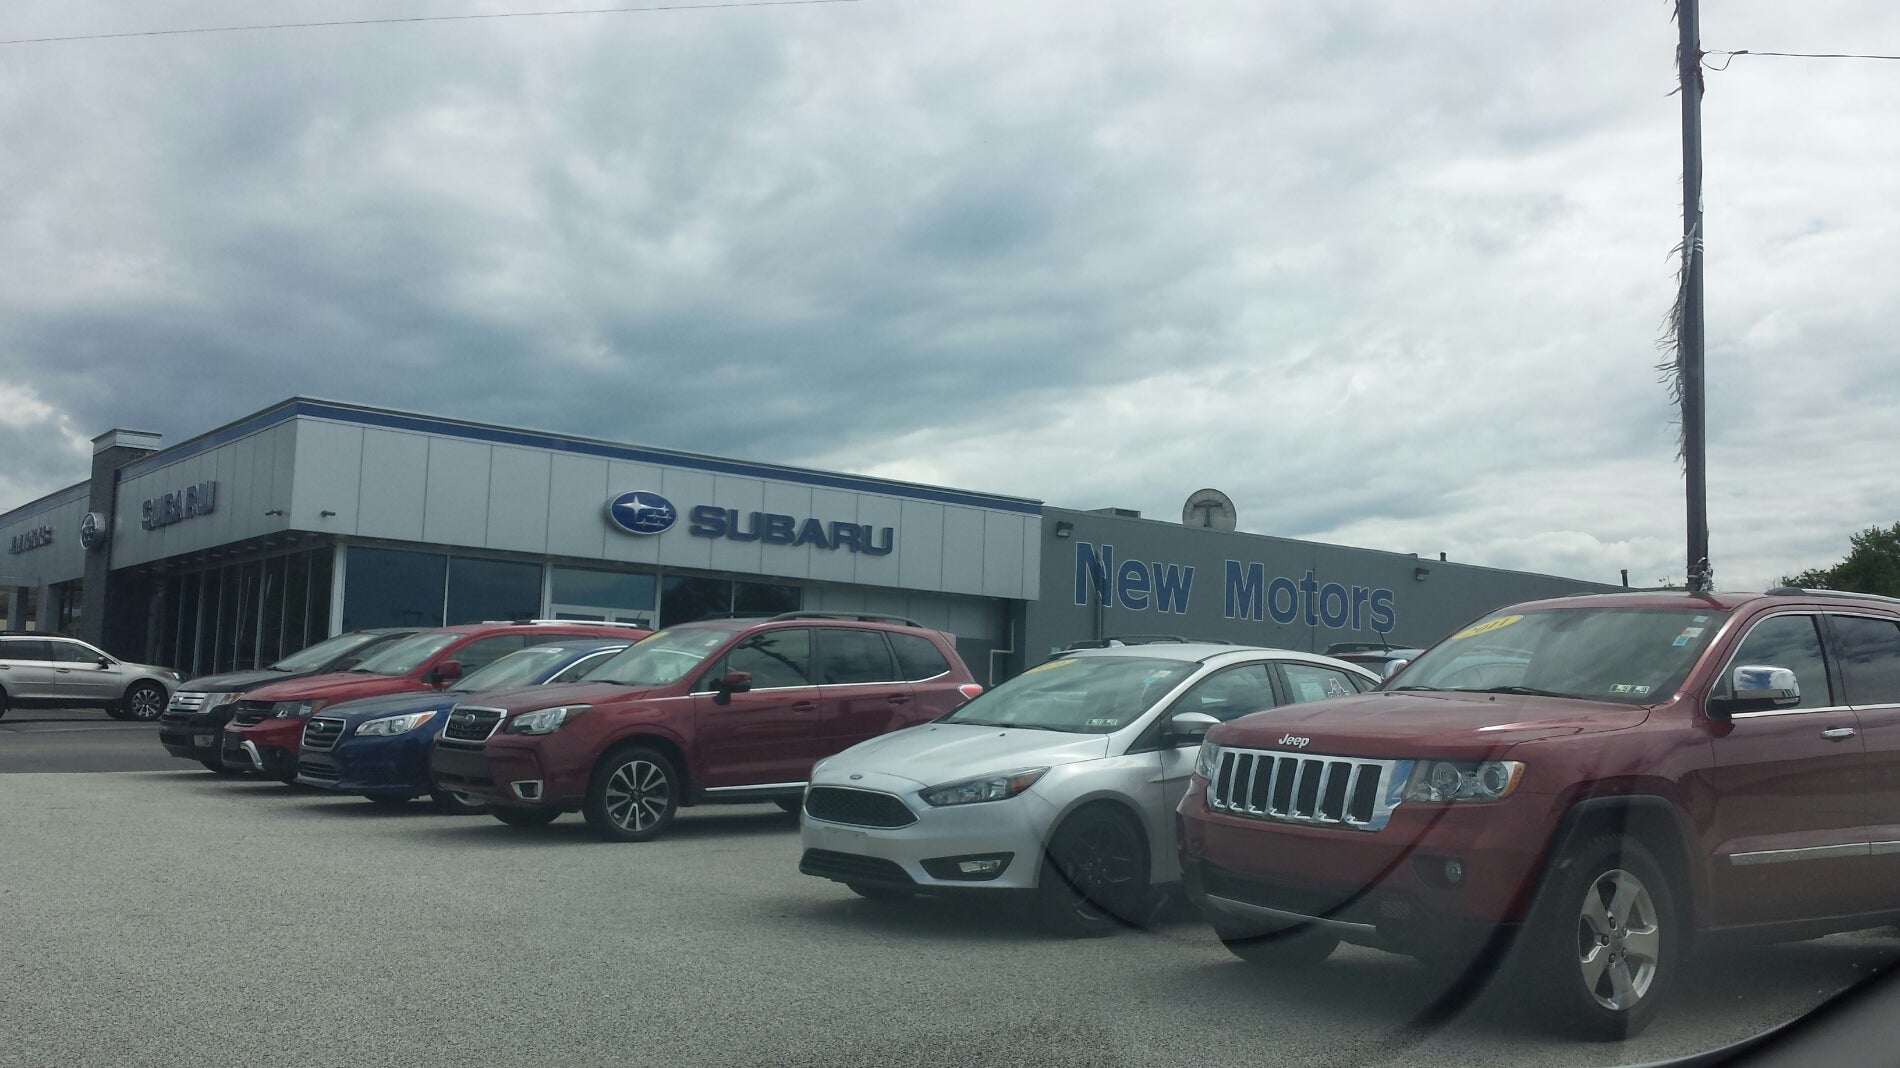 Subaru & Pre Owned Car Dealership in Erie PA. New Motors Subaru